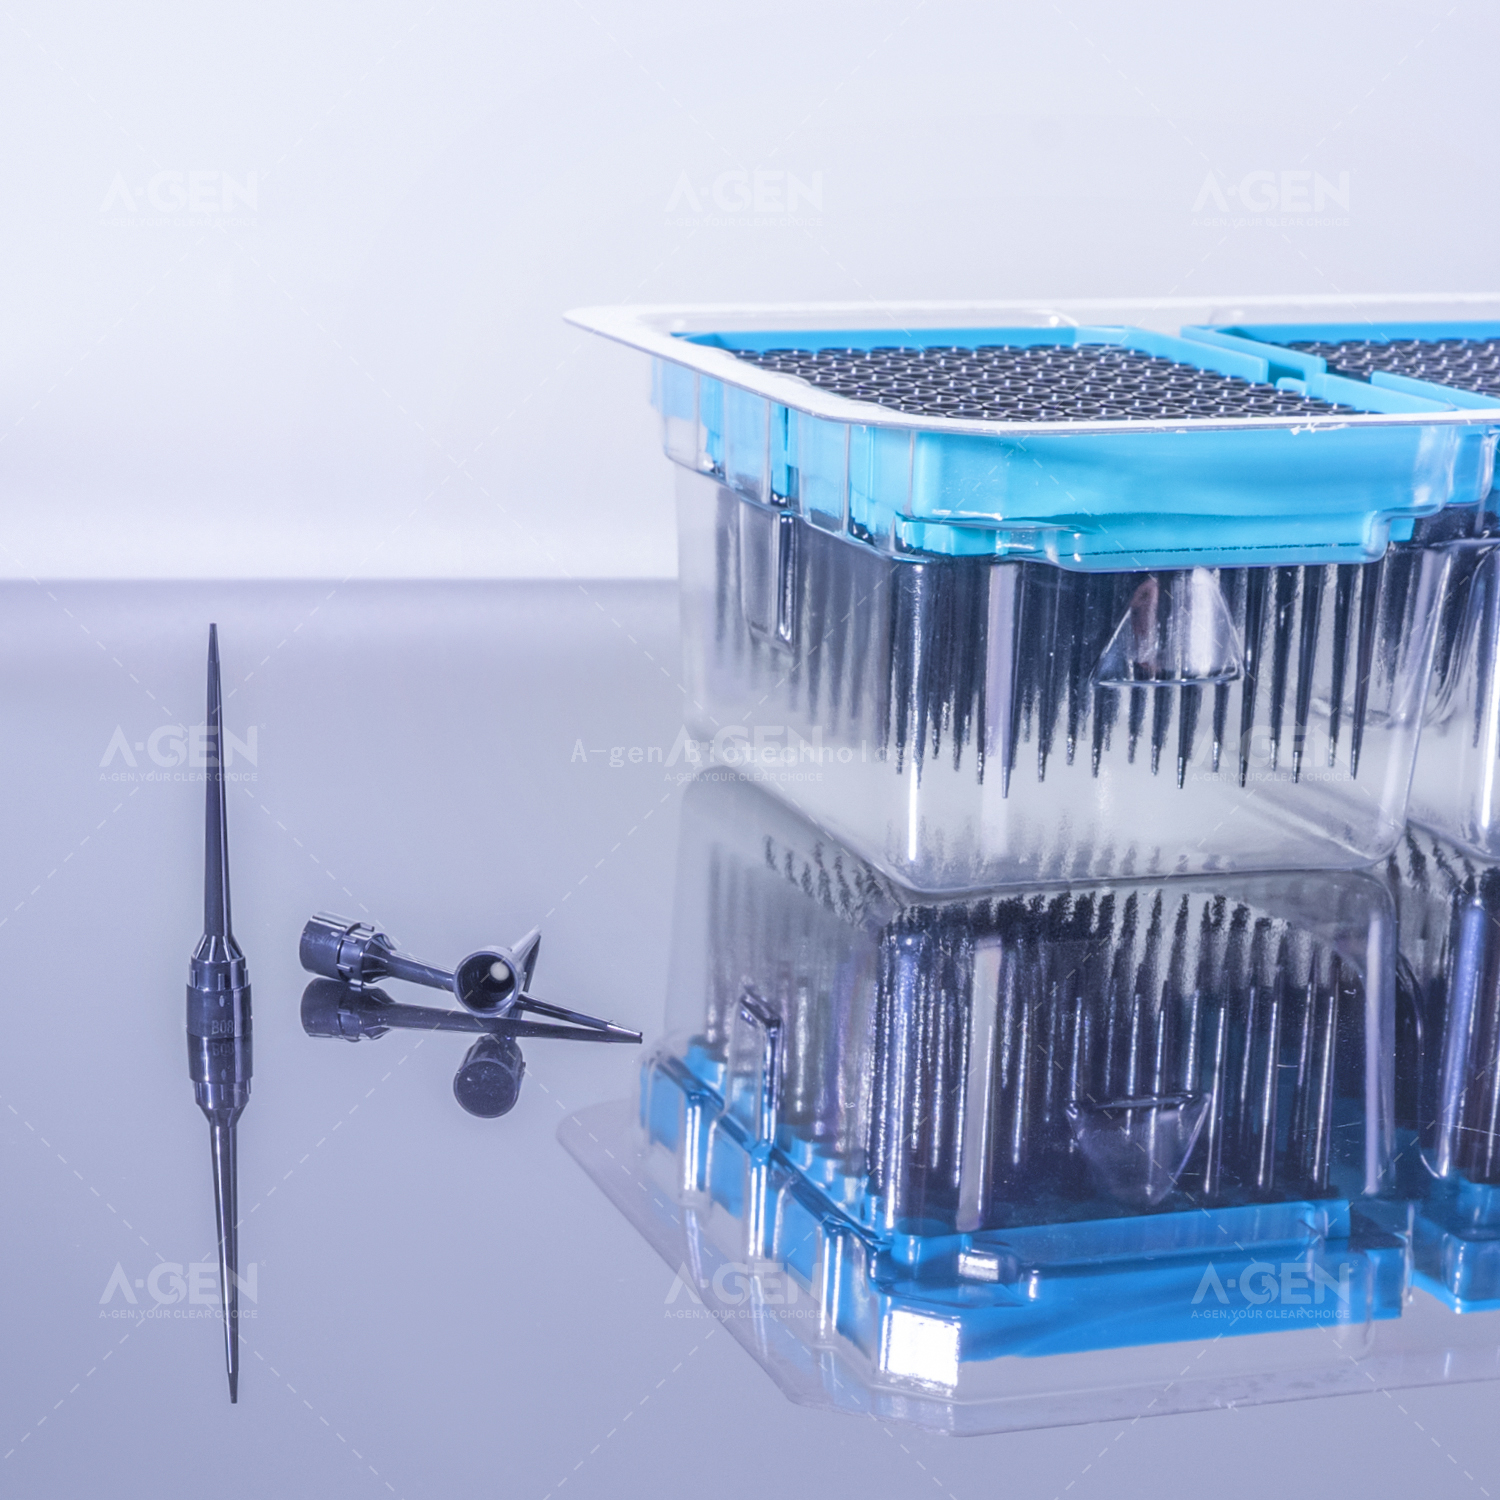 5 Combined Boxes Sterile Hamilton Pipette Tip Conductive 50μL Black PP Pipette Tip for Liquid Transfer Filter